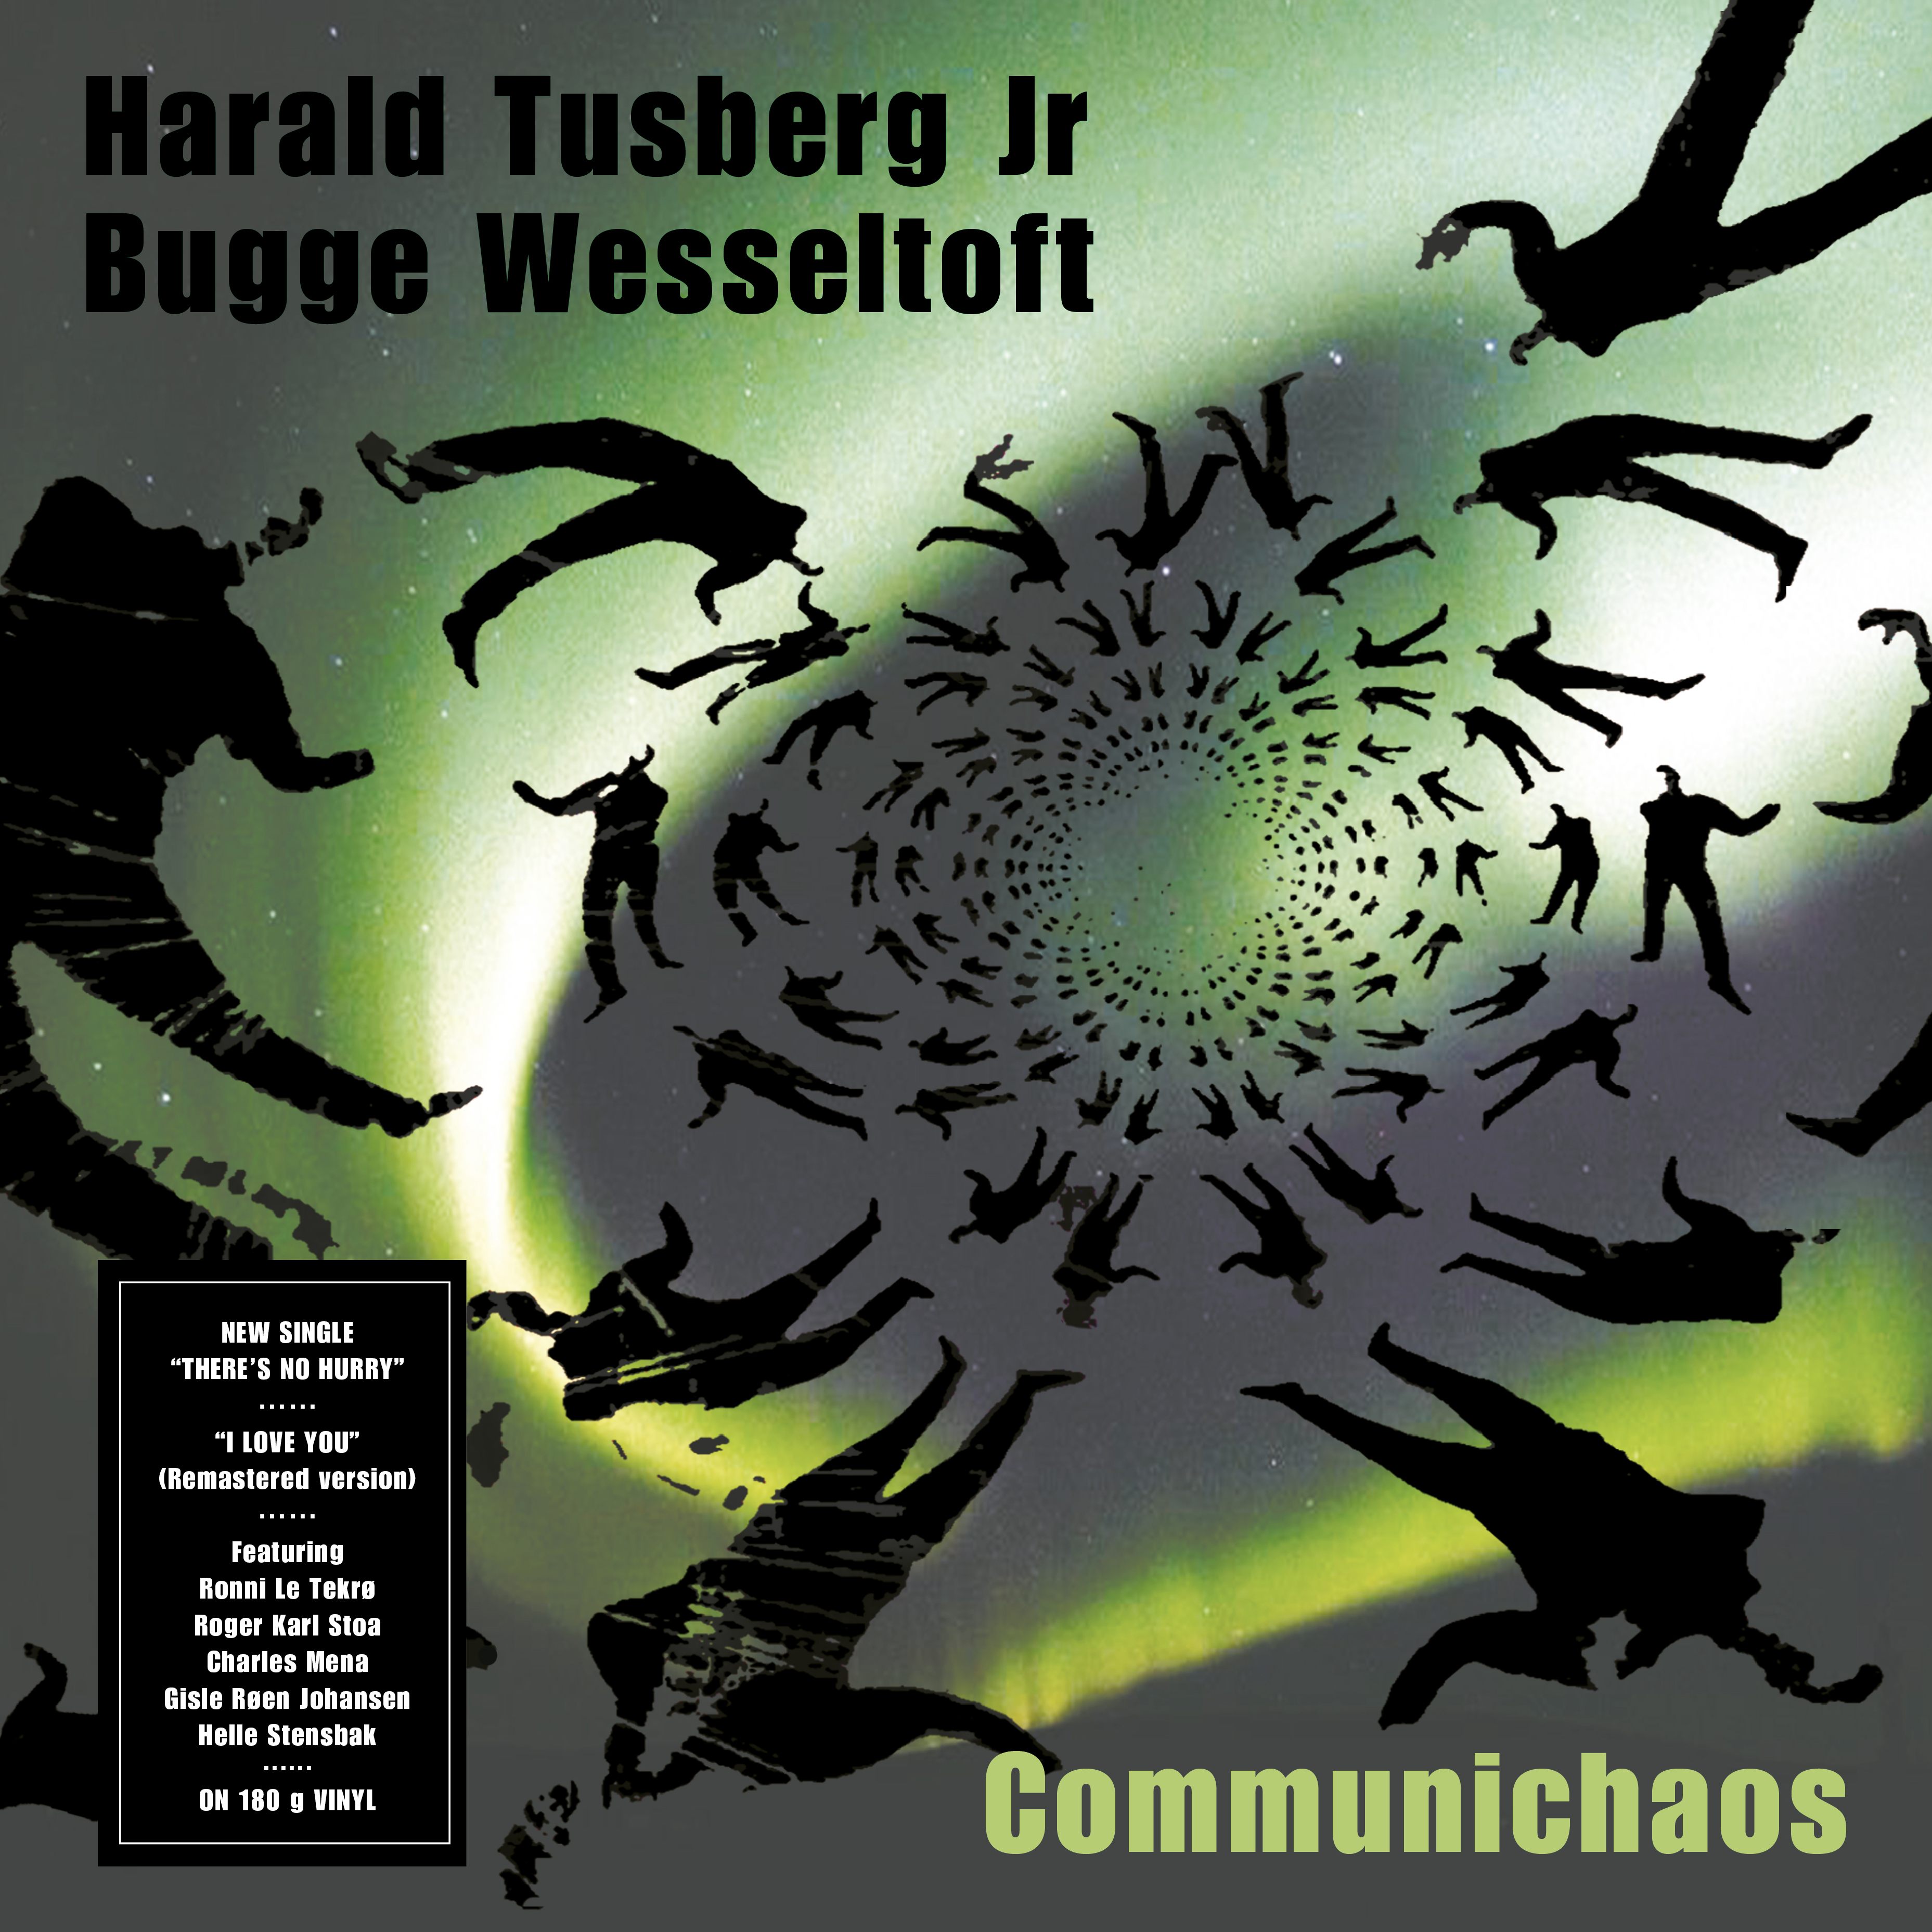 Harald Tusberg Jr. & Bugge Wesseltoft - Communichaos